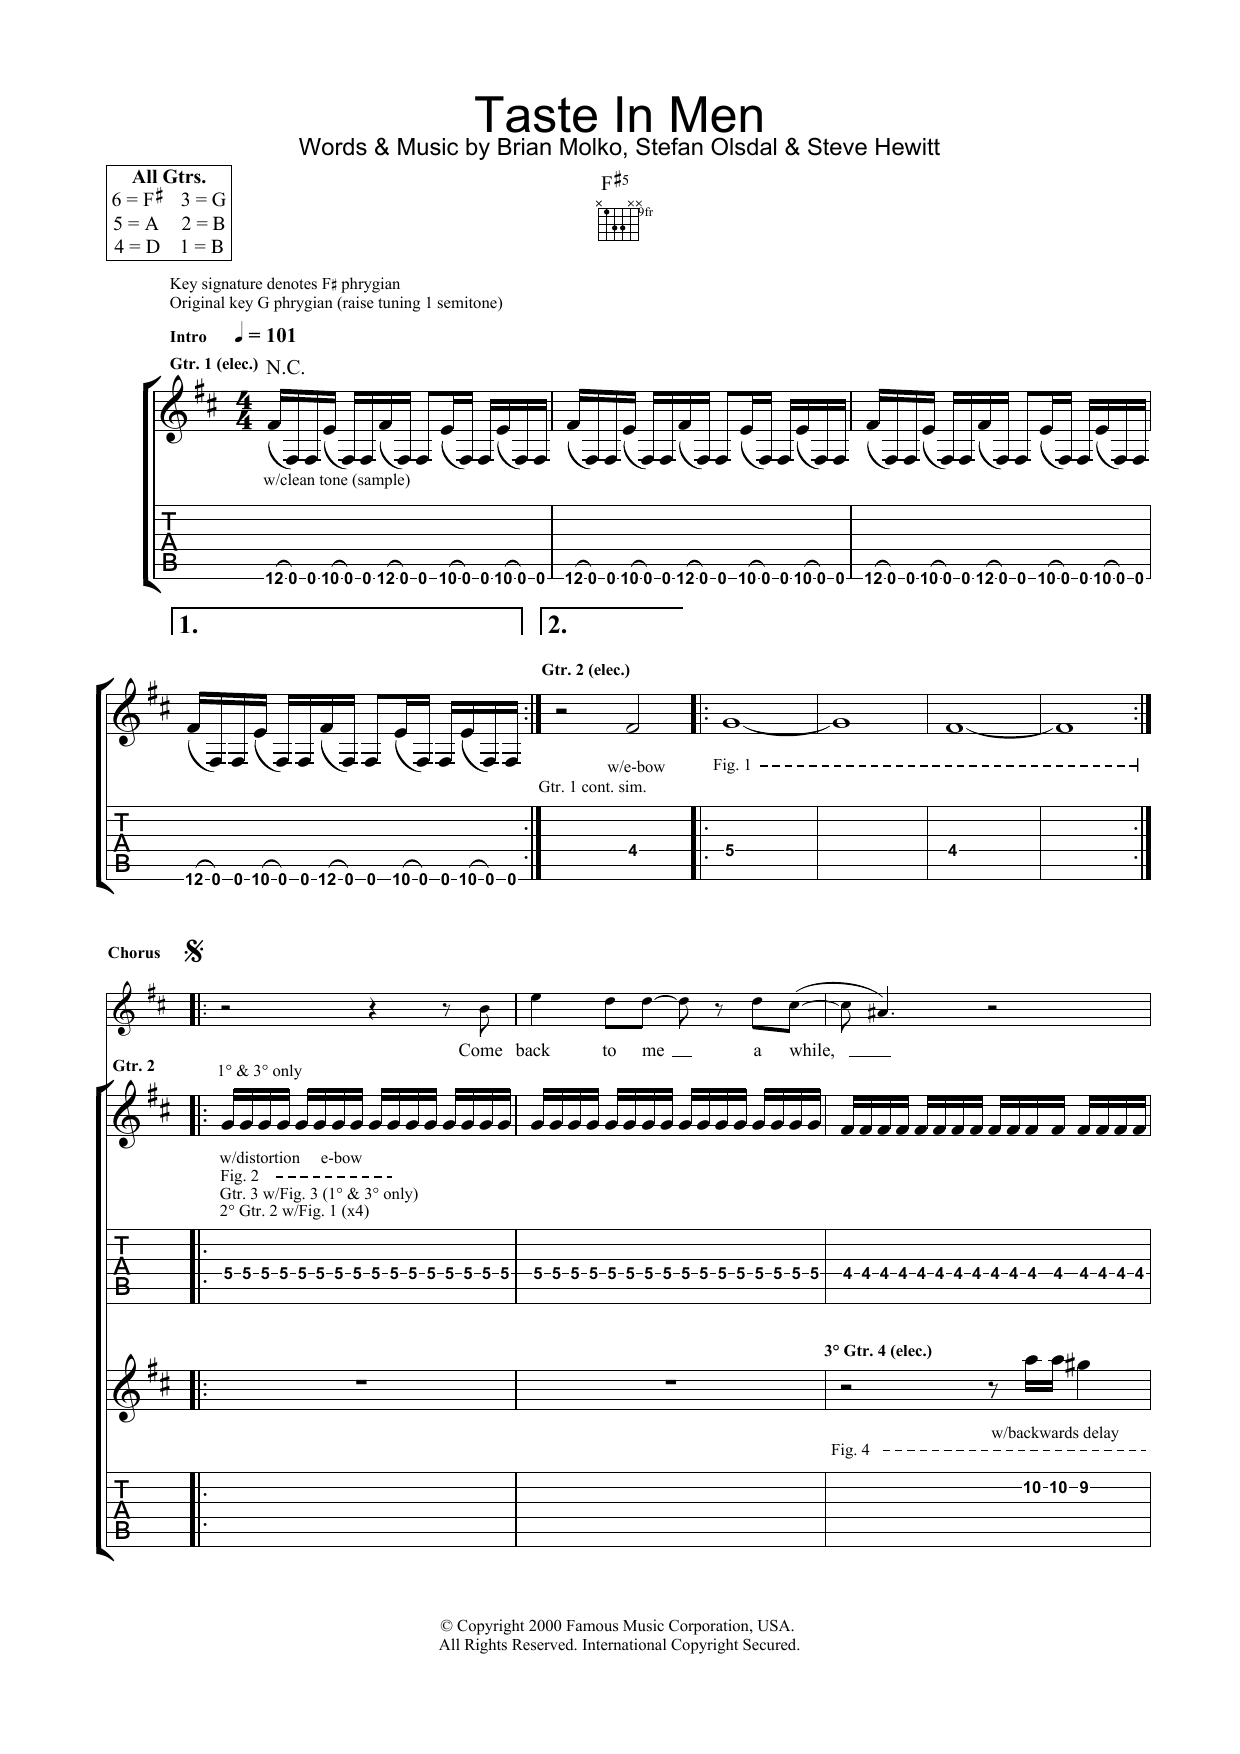 Placebo Taste In Men sheet music notes and chords. Download Printable PDF.